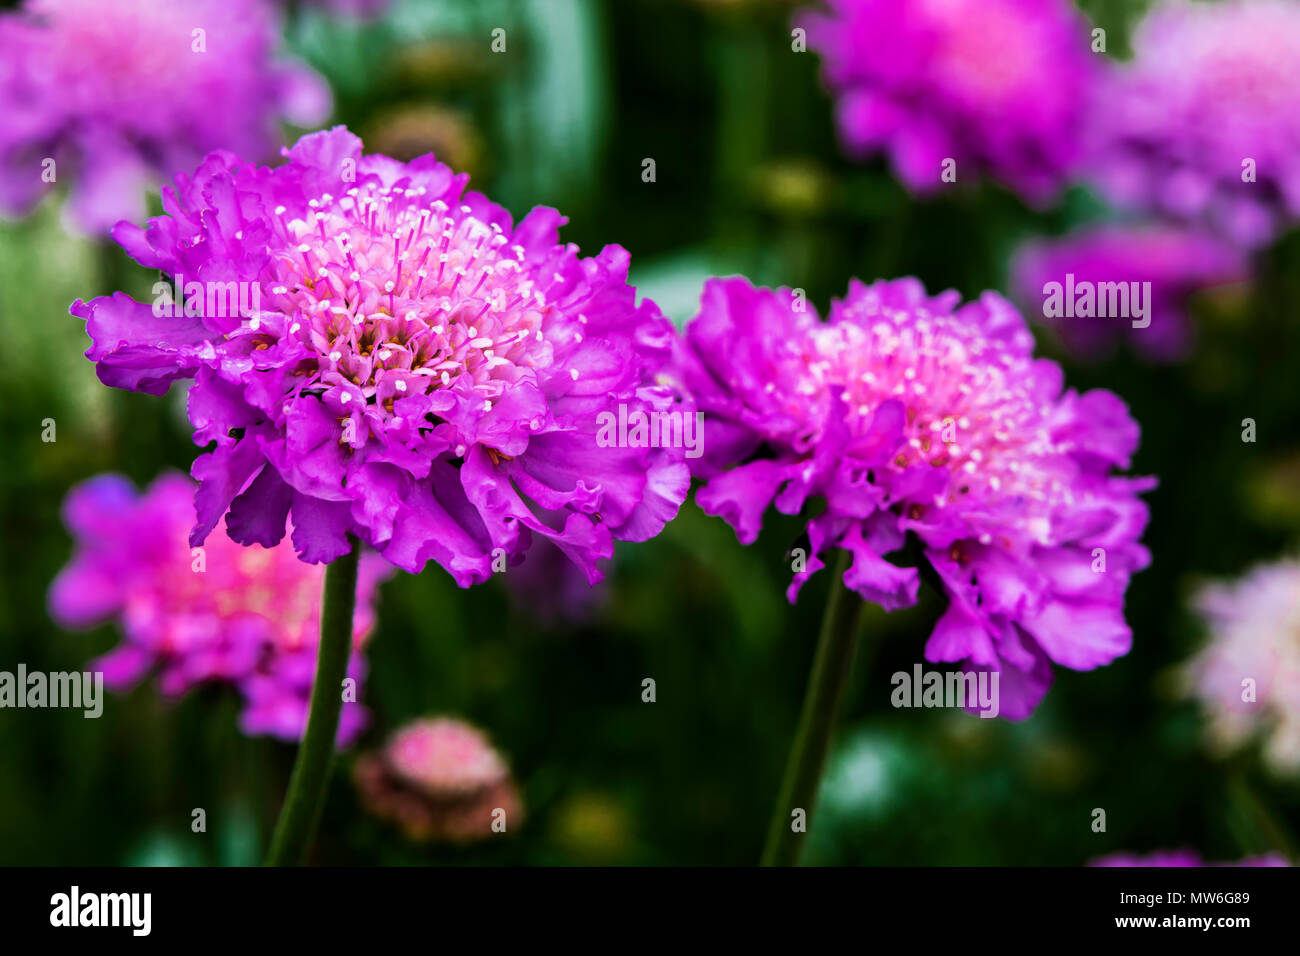 Purple Scabiosa (Pin Cushion flower) flowering plant close-up. Stock Photo